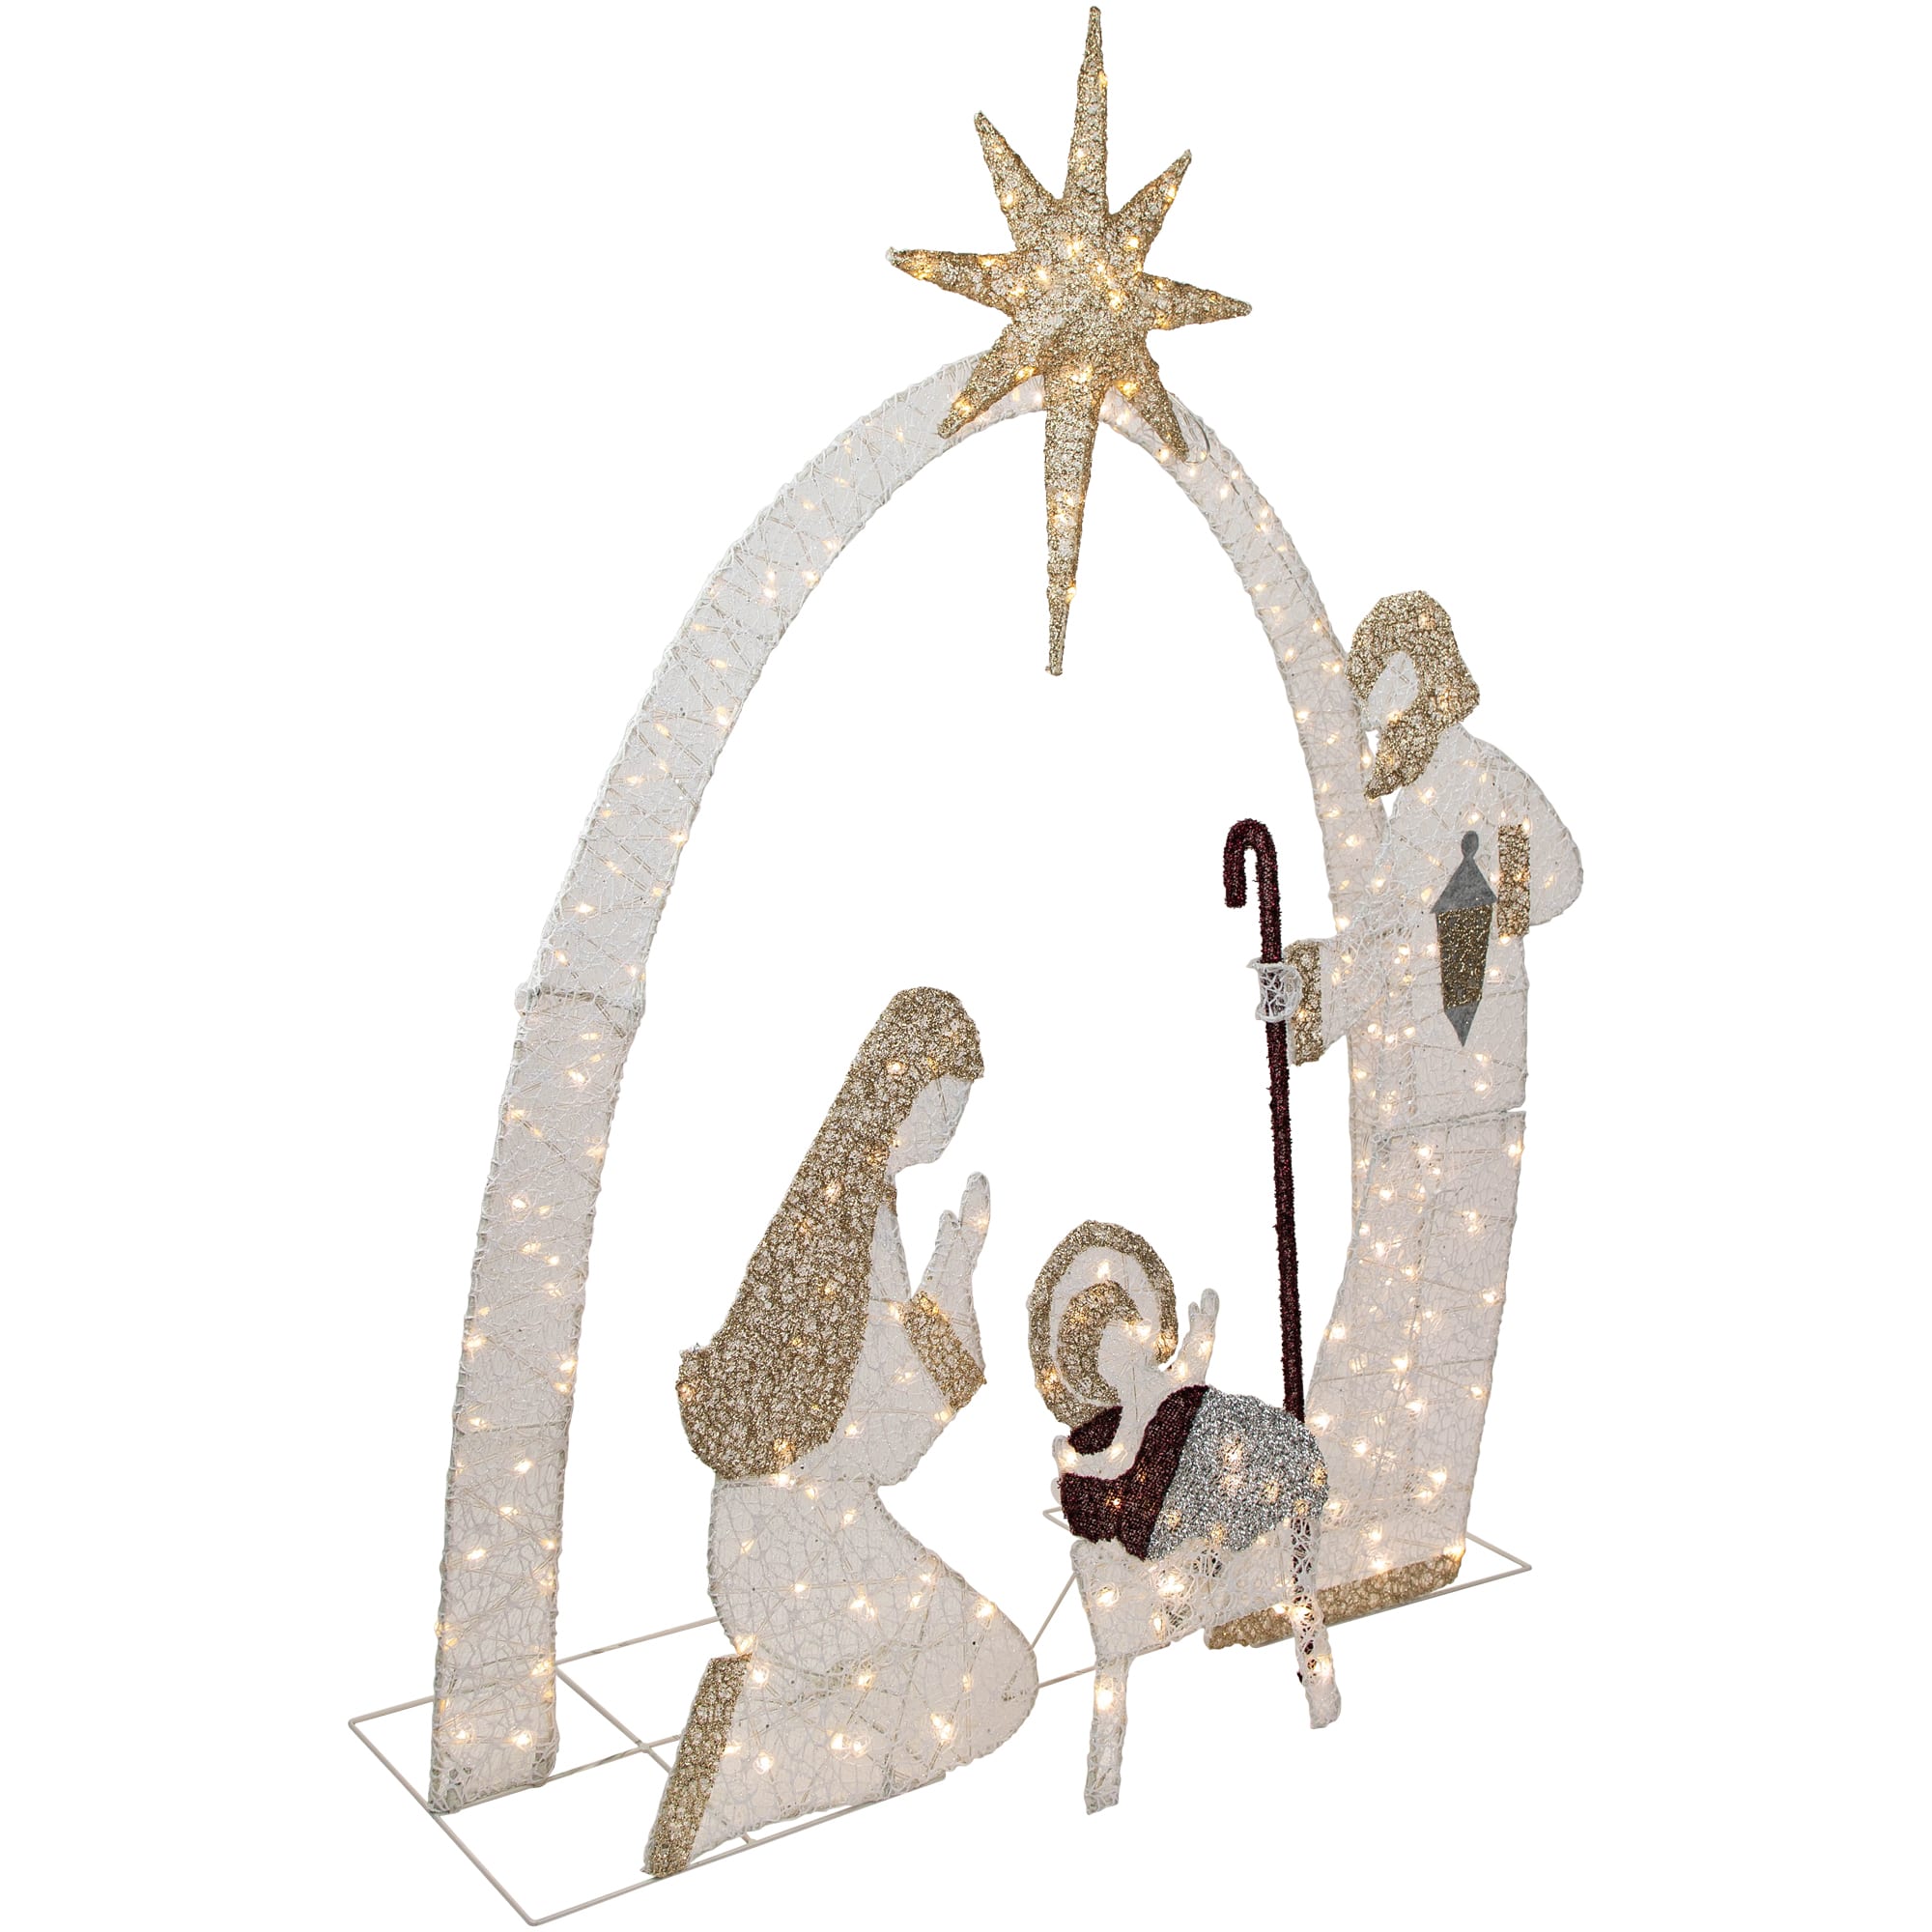 7ft. LED Lighted Holy Family Nativity Scene Outdoor Christmas Decoration